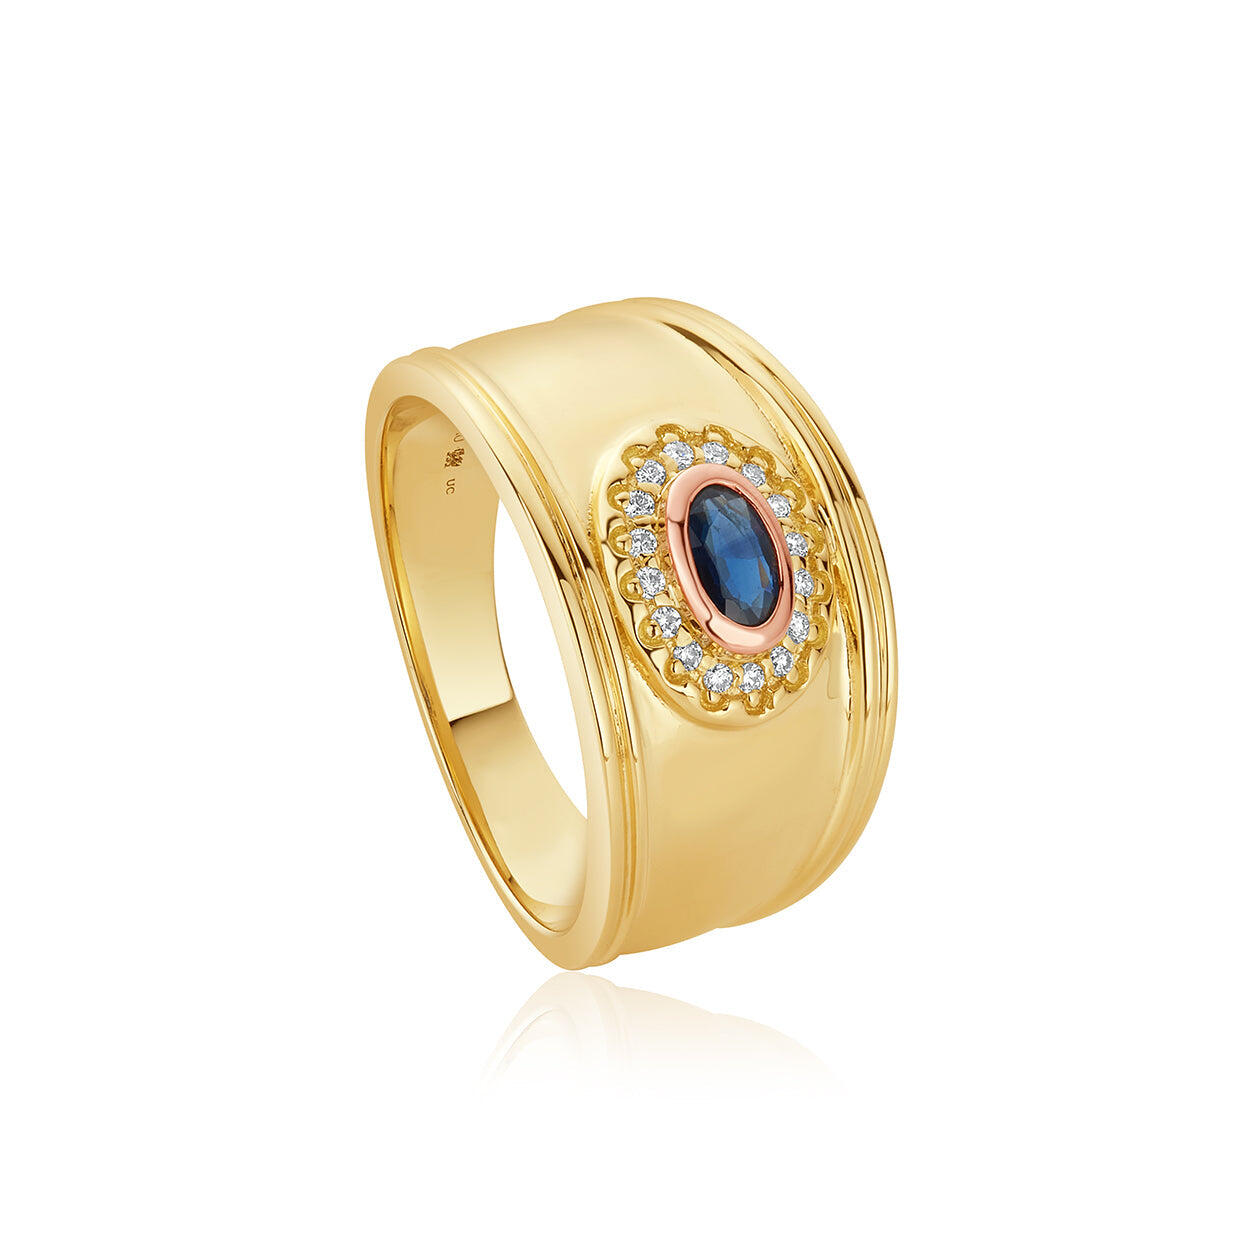 Clogau Princess Diana Sapphire Diamond 9ct Gold Ring - O